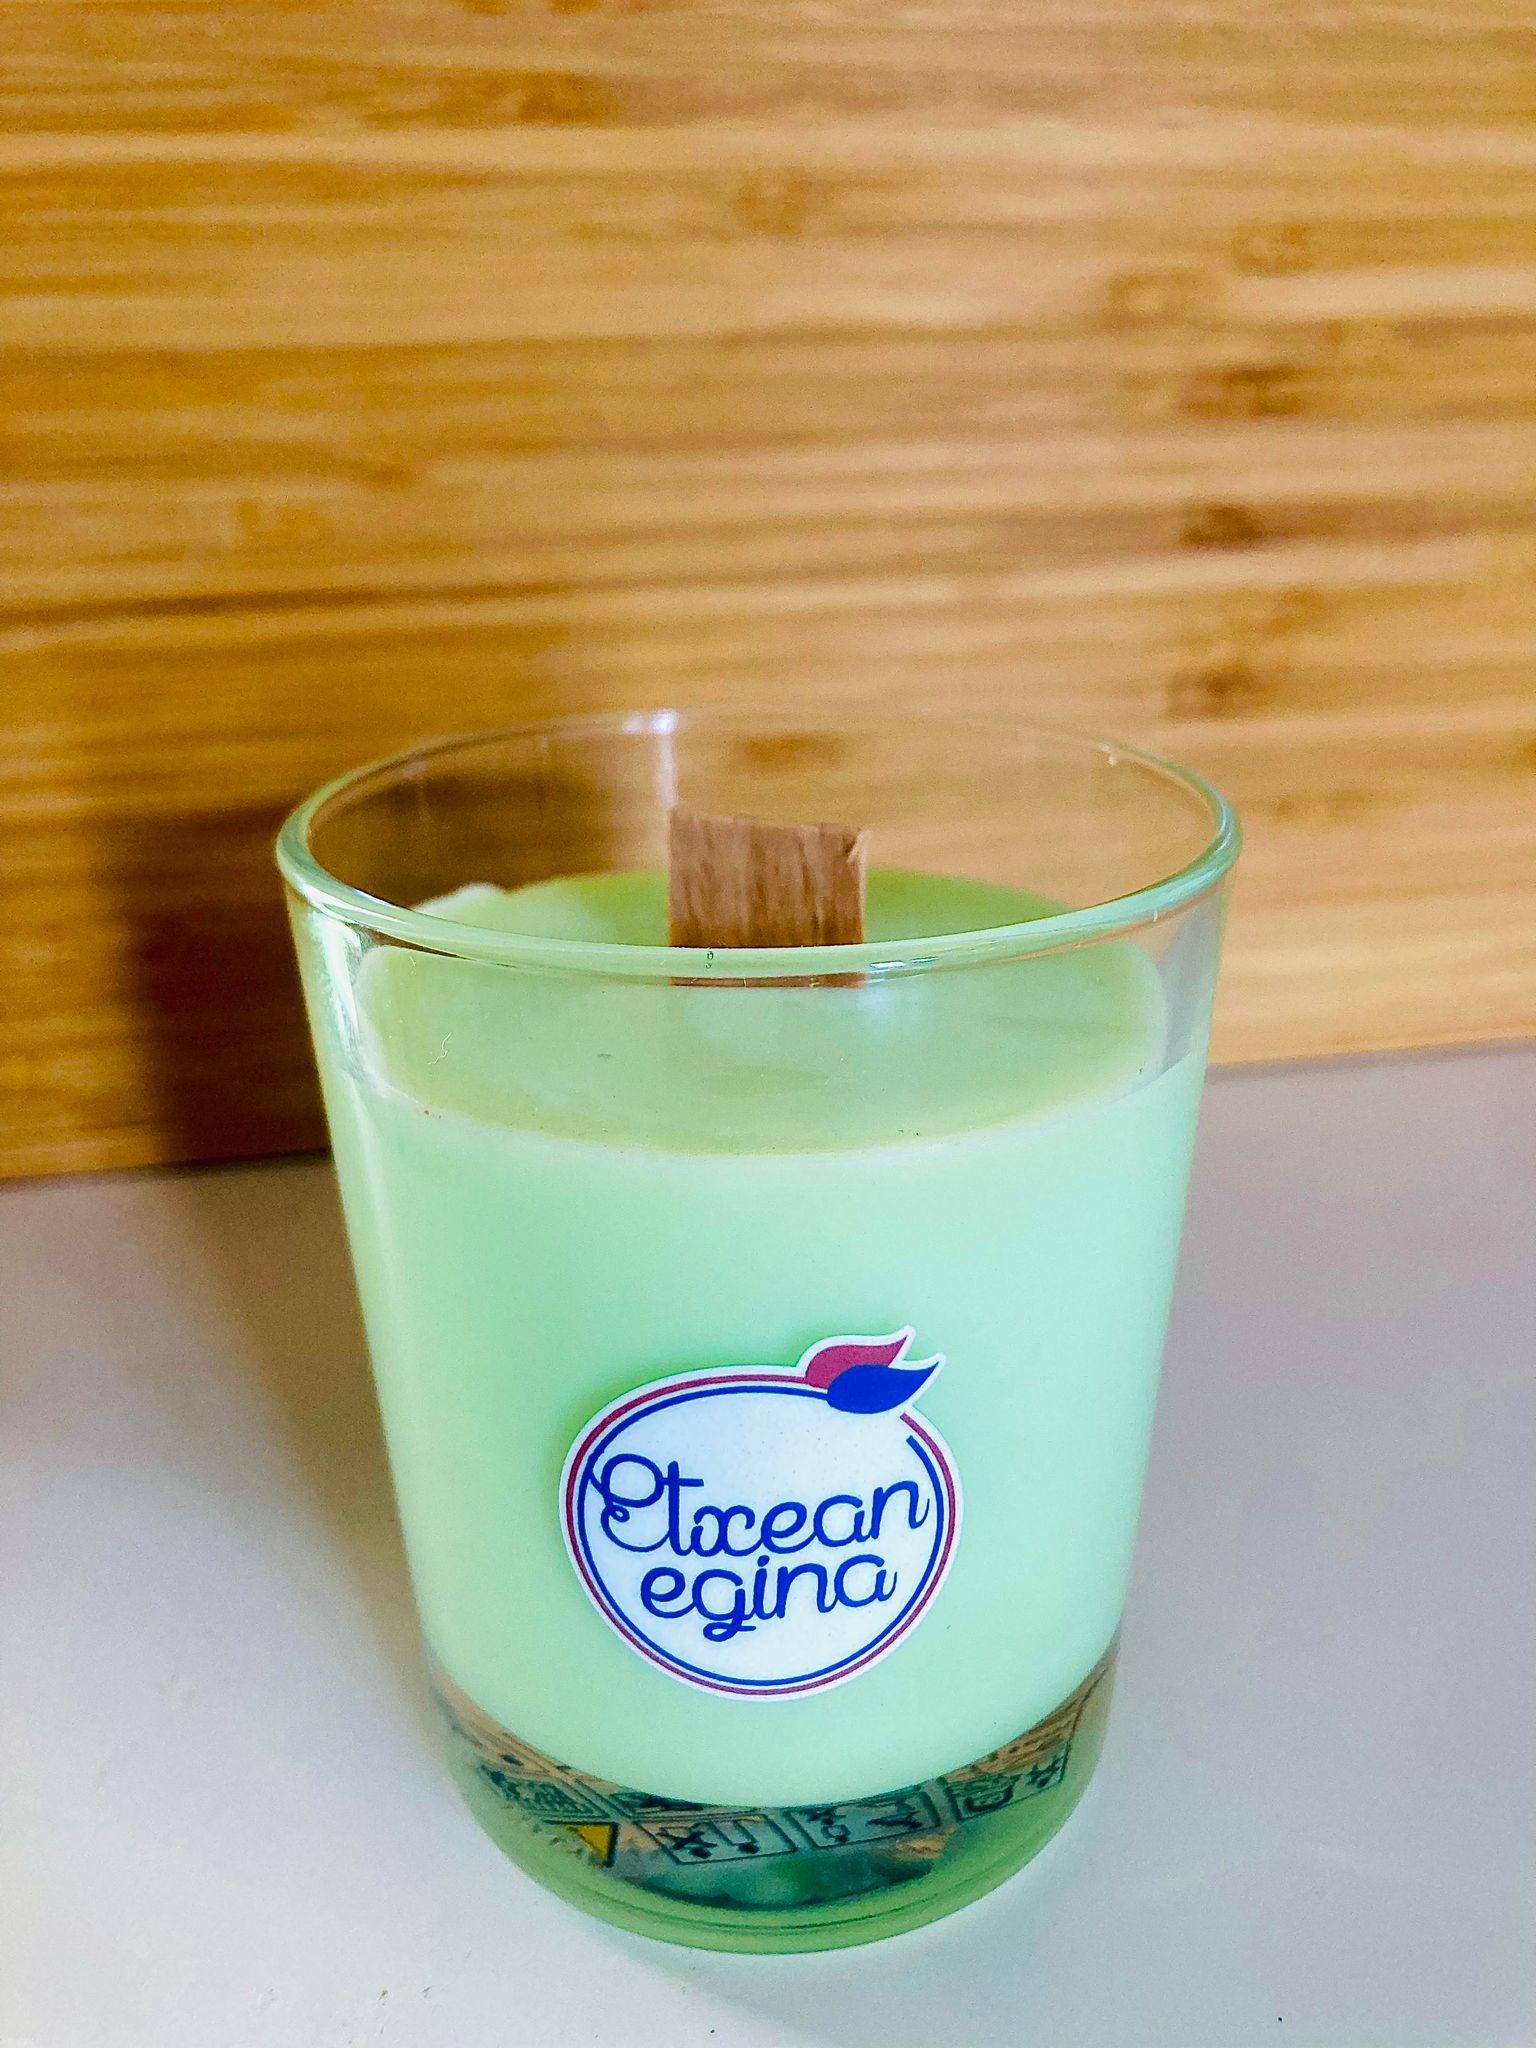 bougie parfumée couleur pastel etxean egina artisanal basque vert vetiver